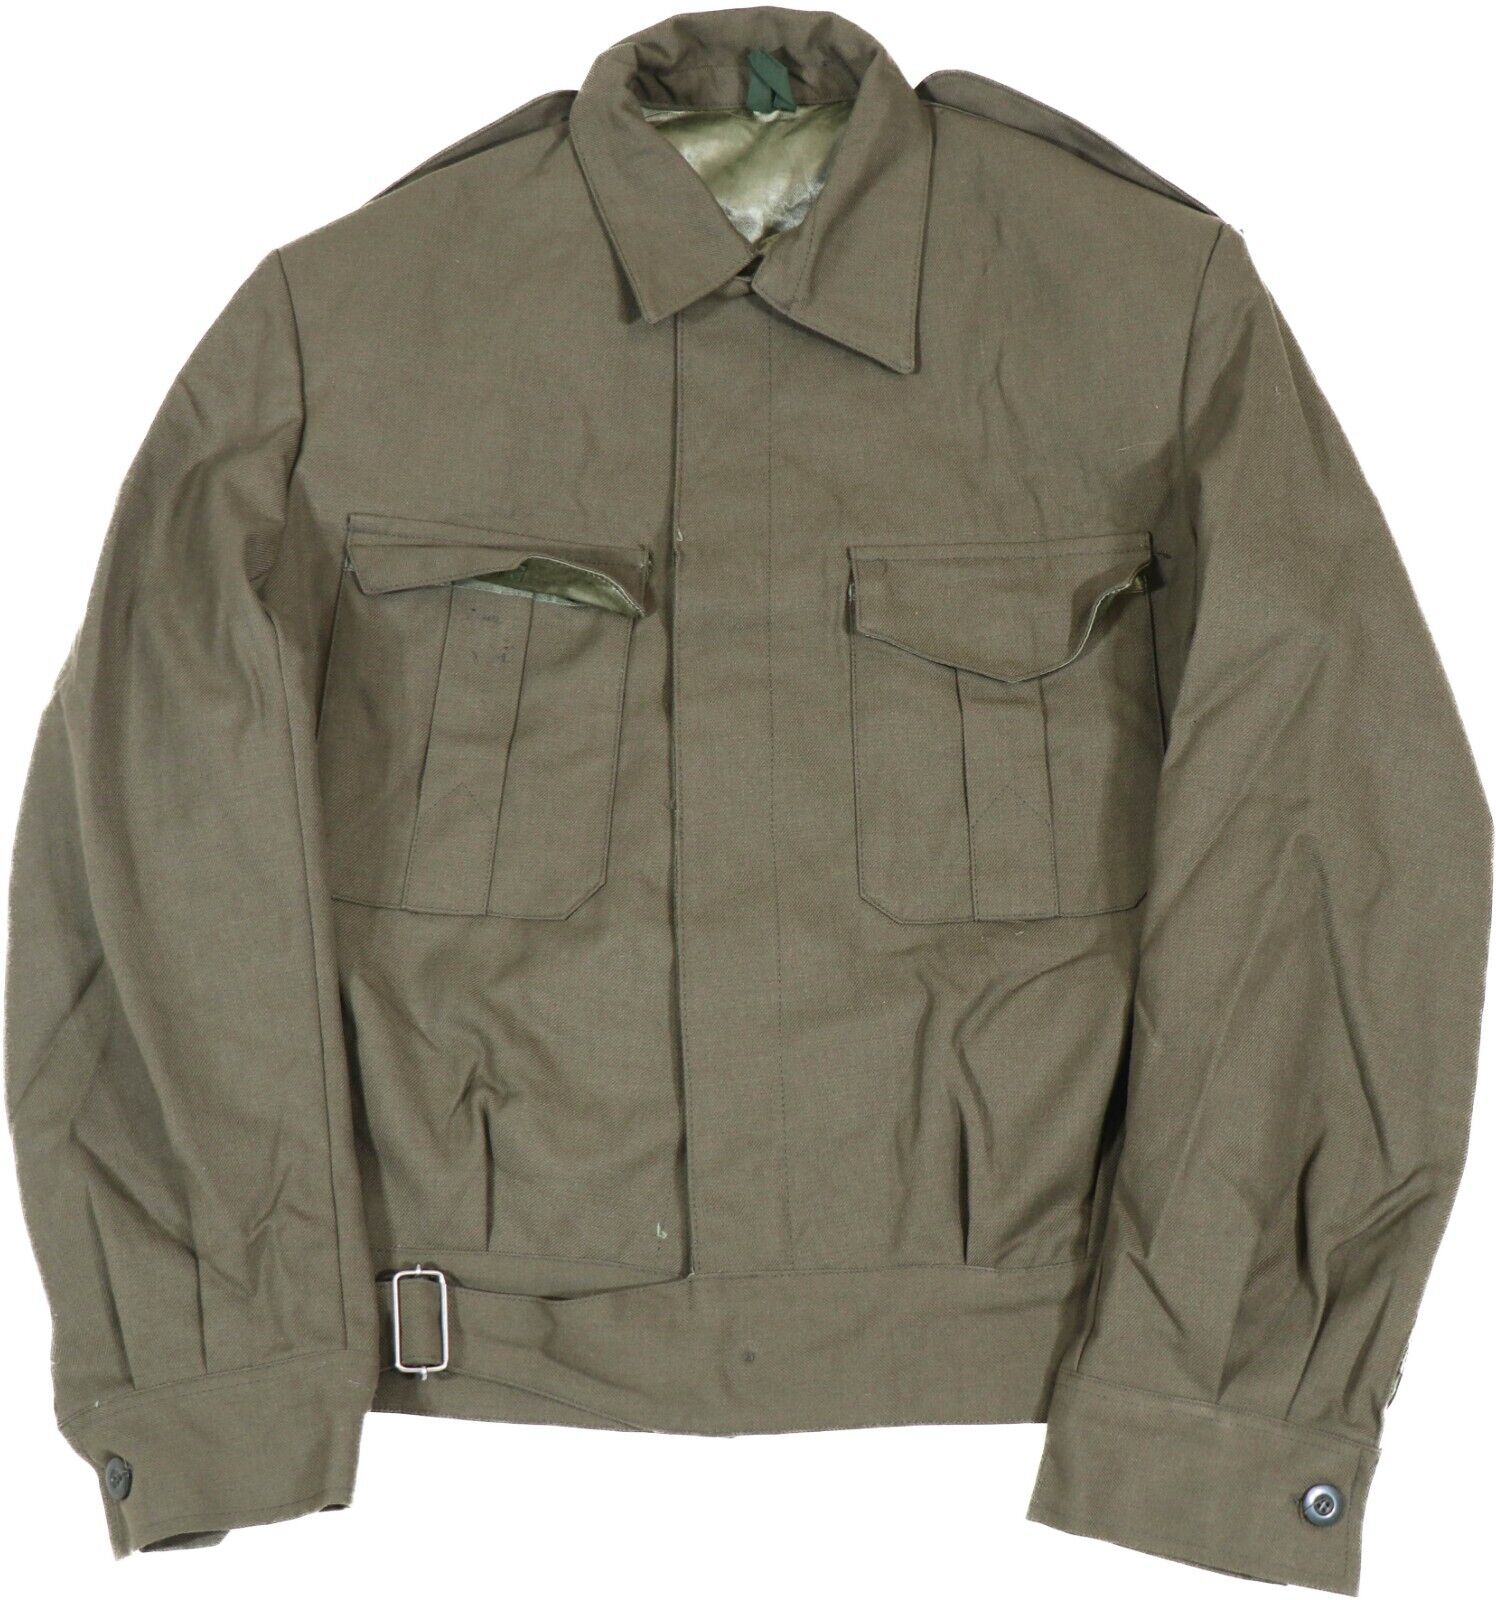 Medium - Authentic Greek Army IKE Field Jacket Uniform OD Green Military Shirt